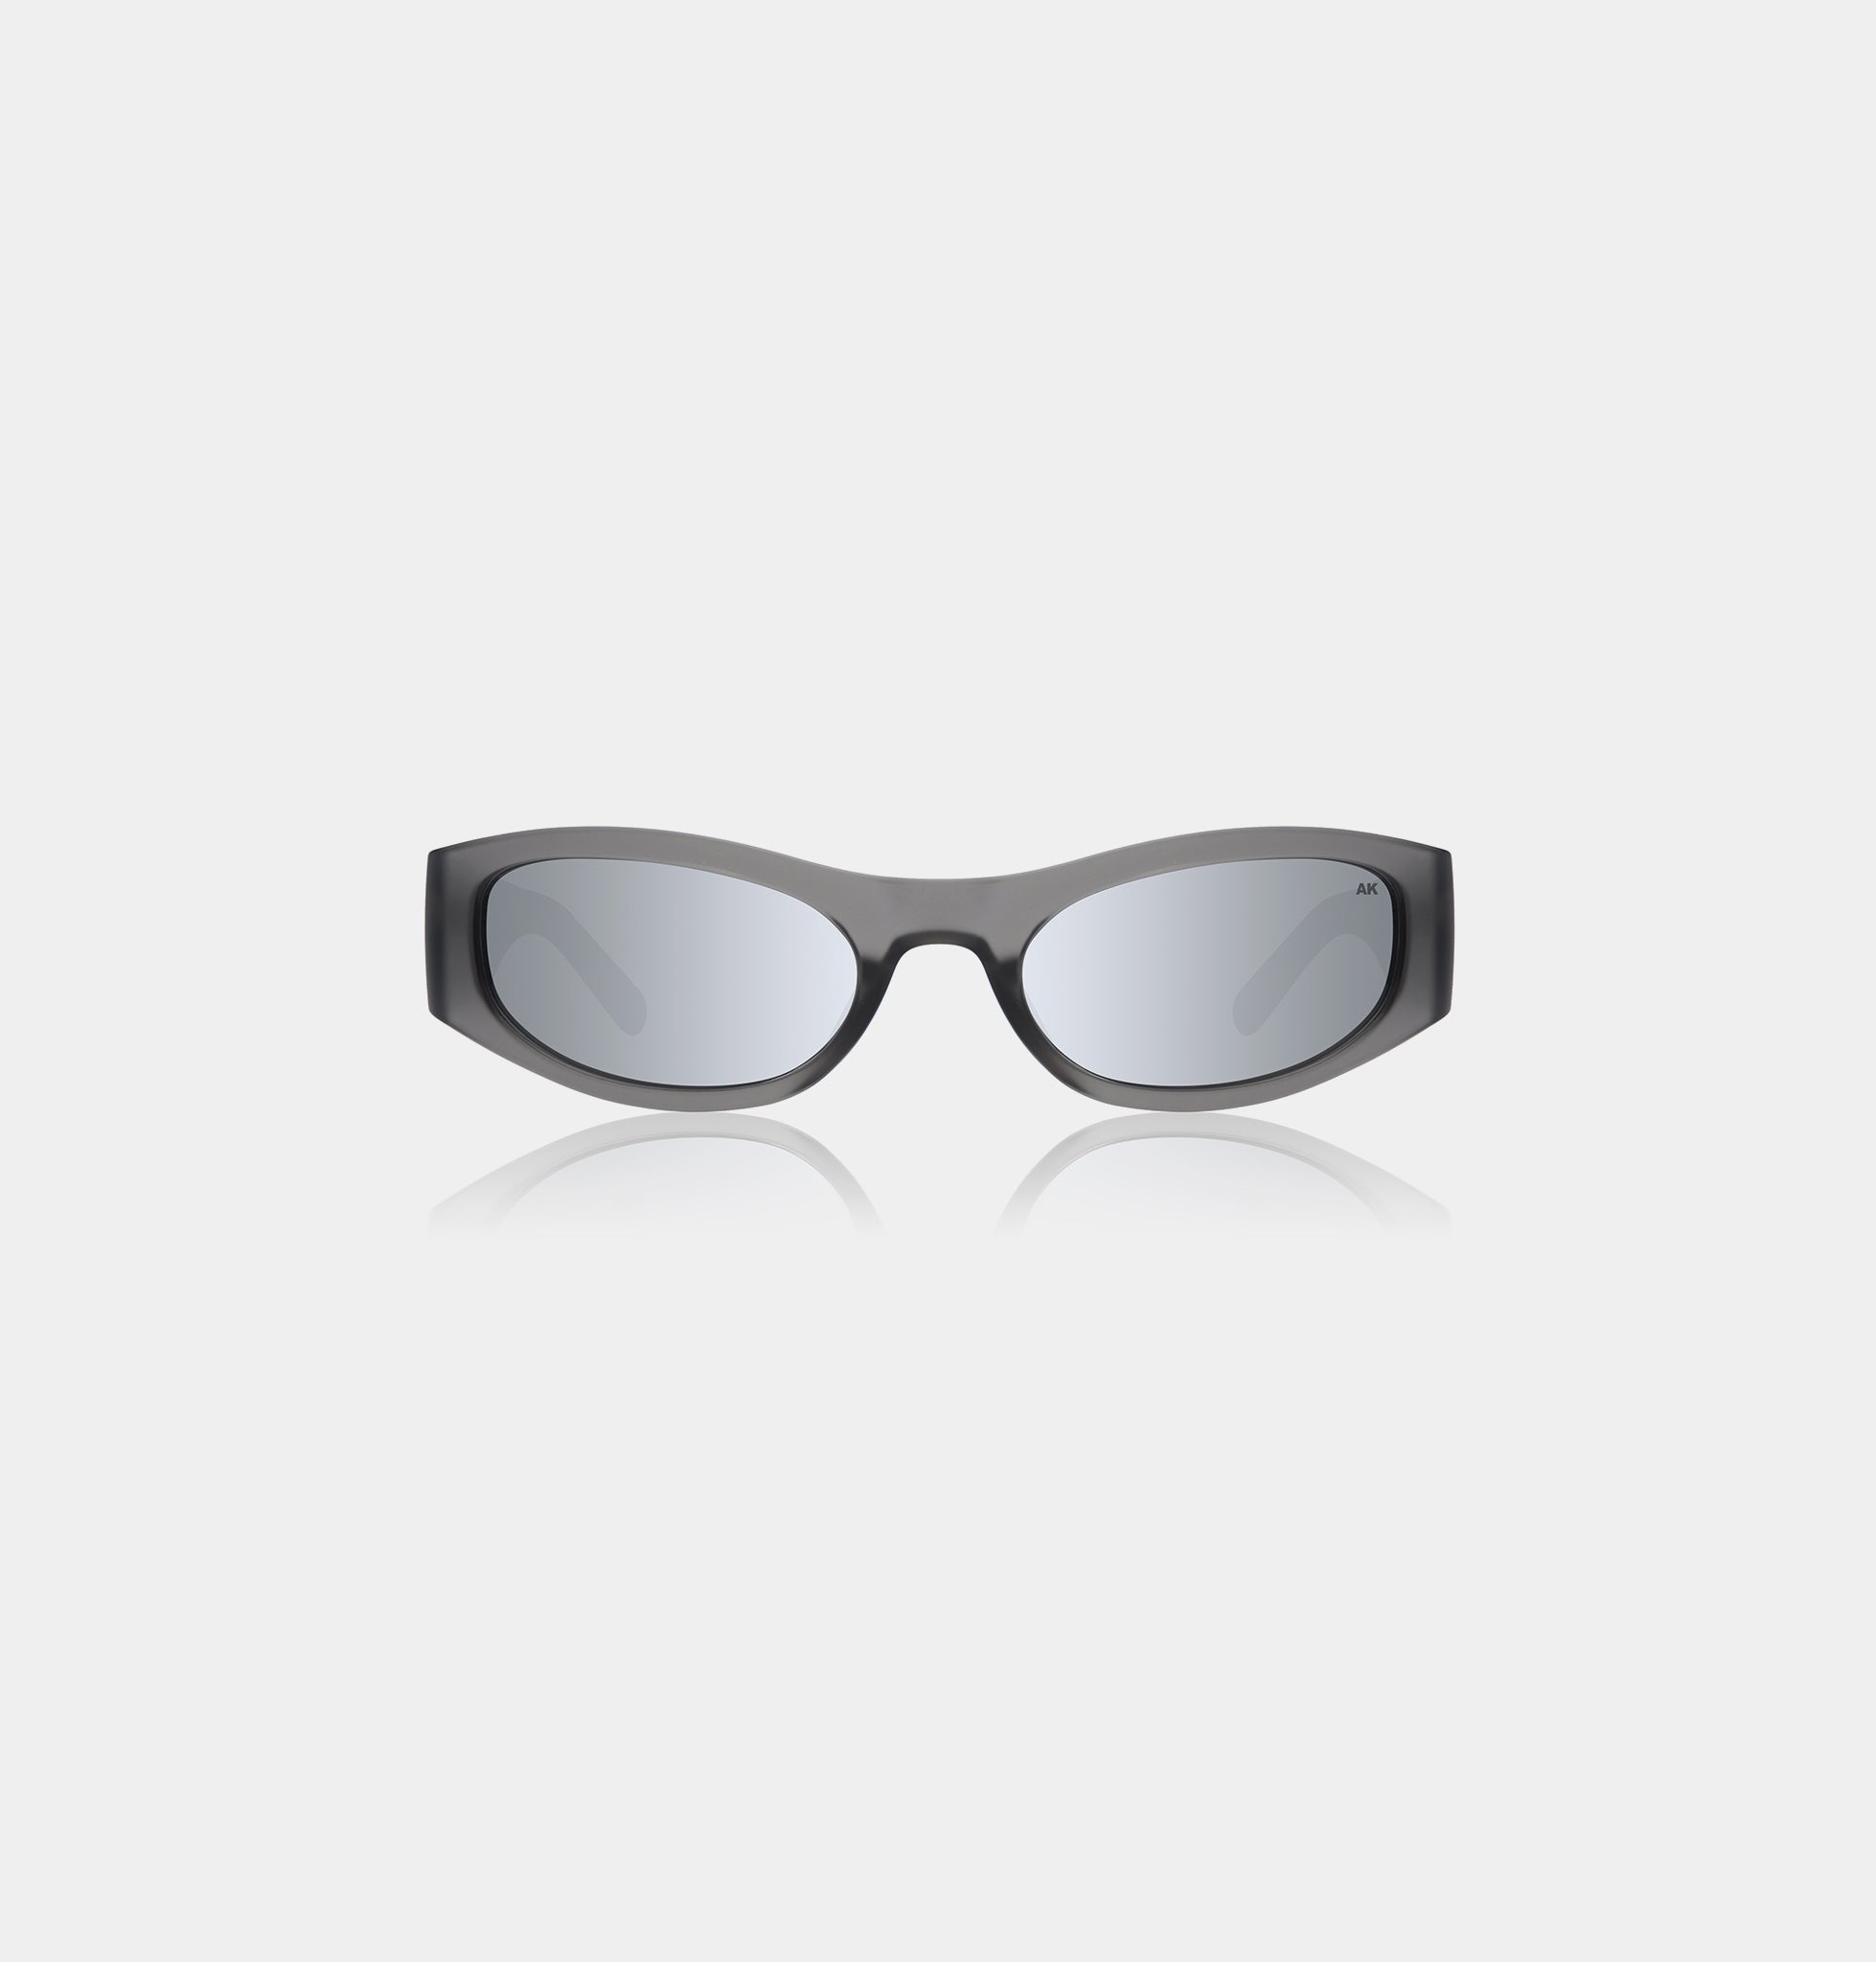 Gust Sunglasses - Matte Grey / Semi Mirror